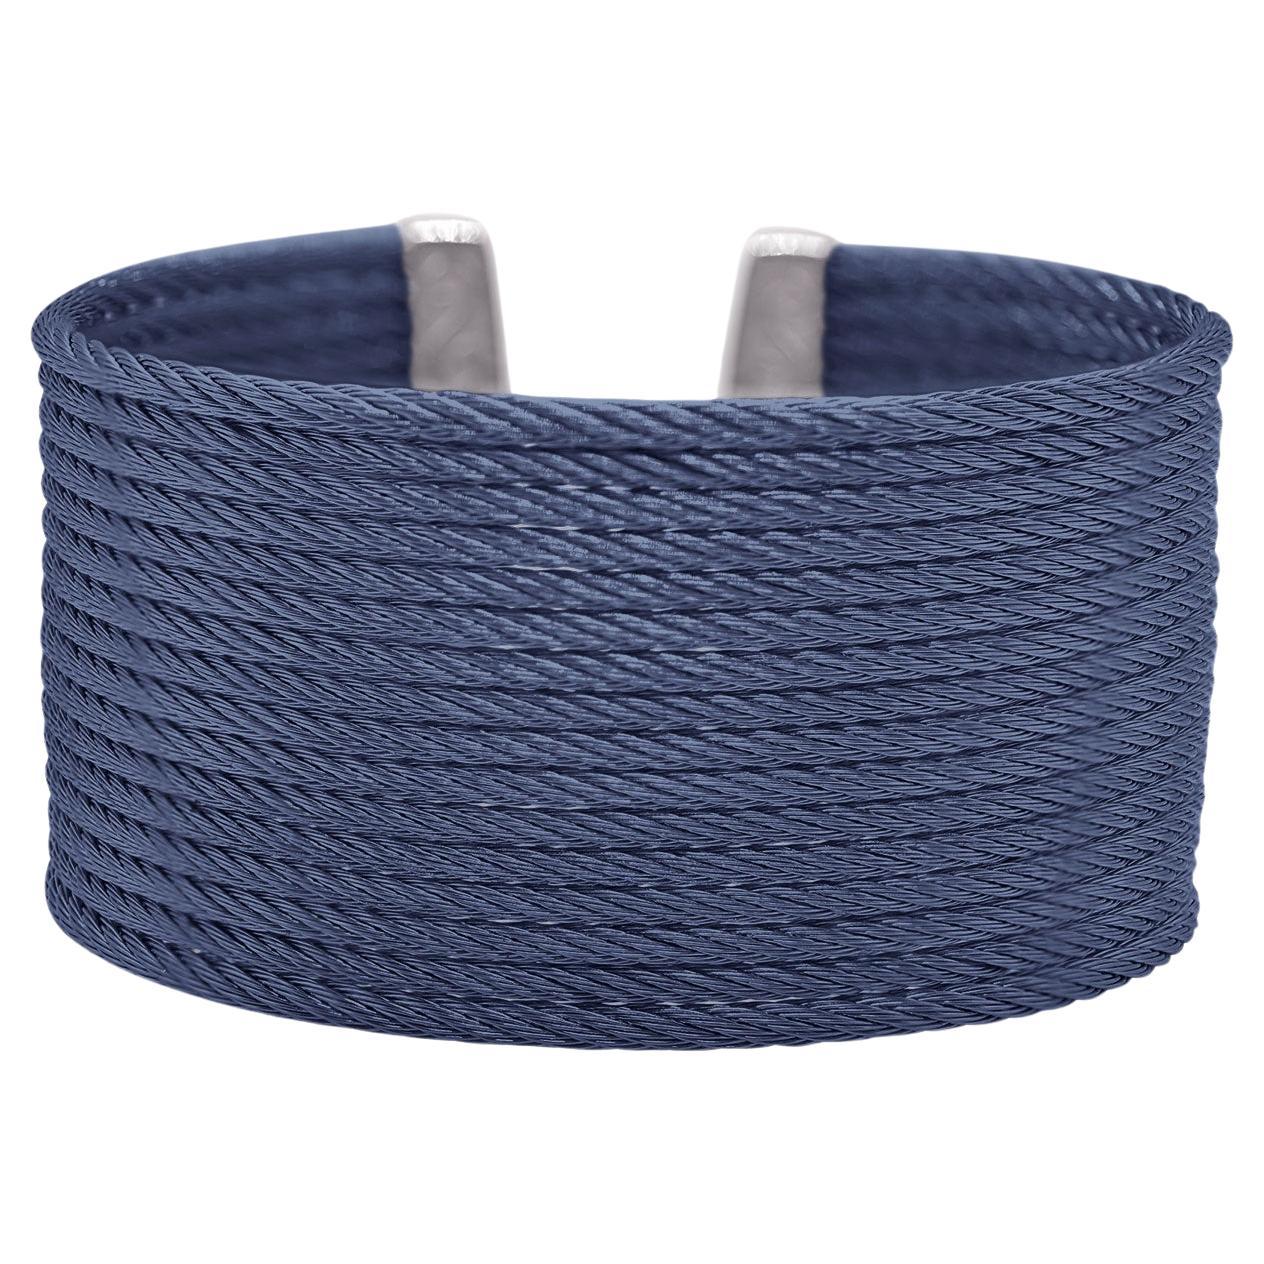 Alor Blueberry Cable Cuff Essentials Manchette 16 rangs 